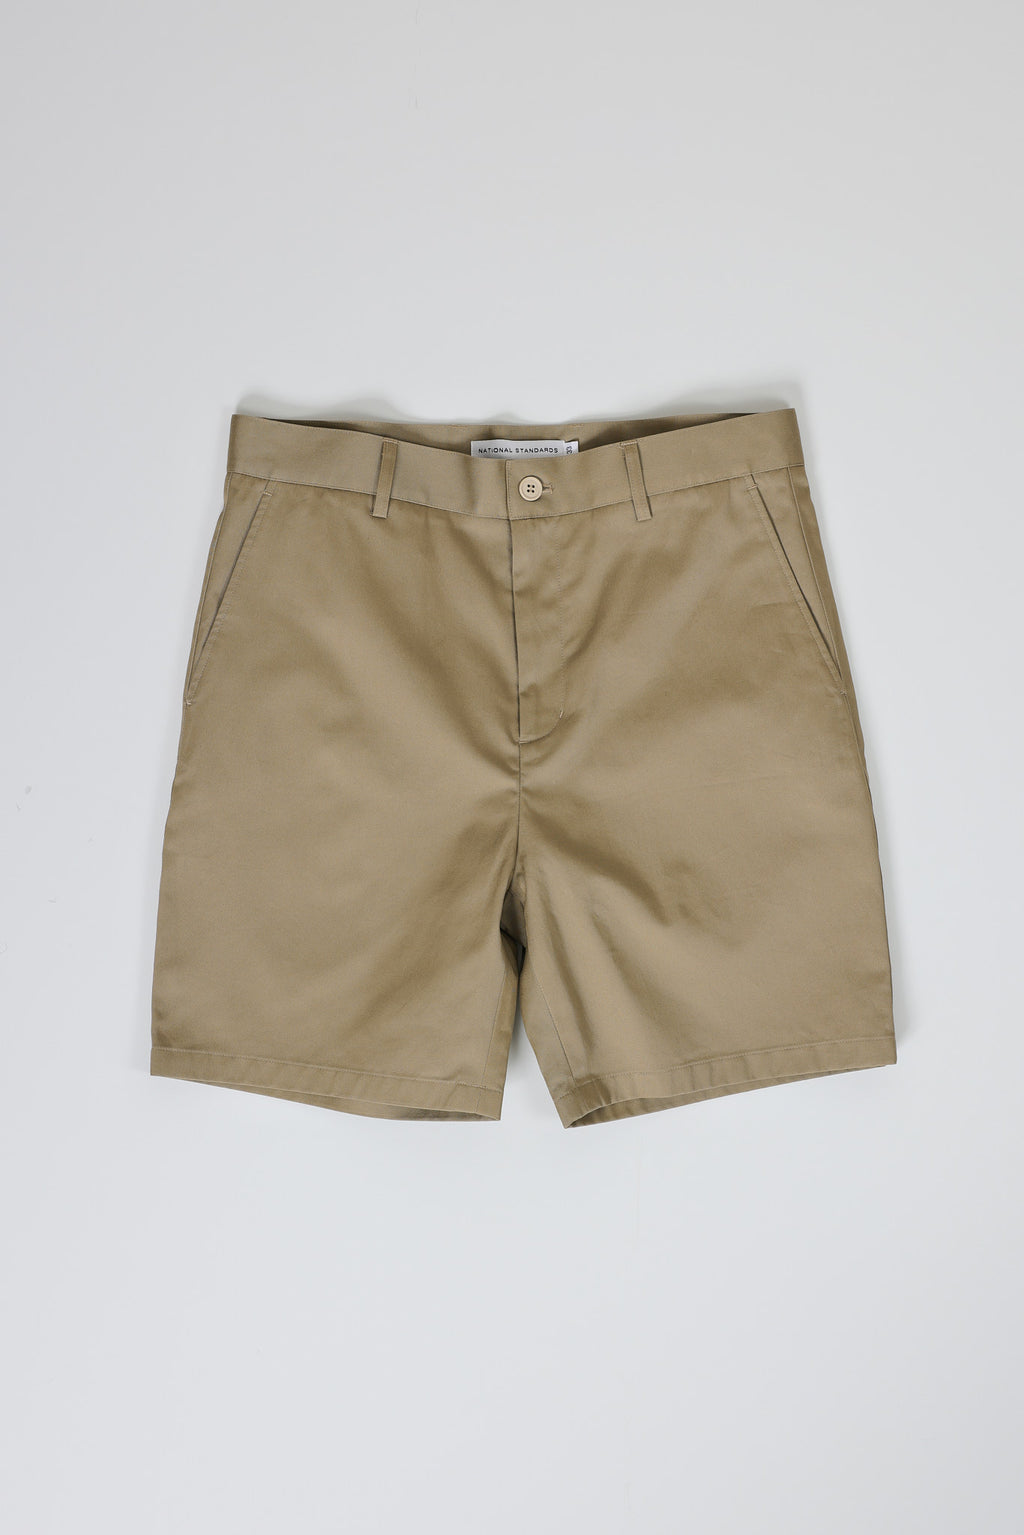 Japanese Chino Shorts High Density Twill in Khaki 01